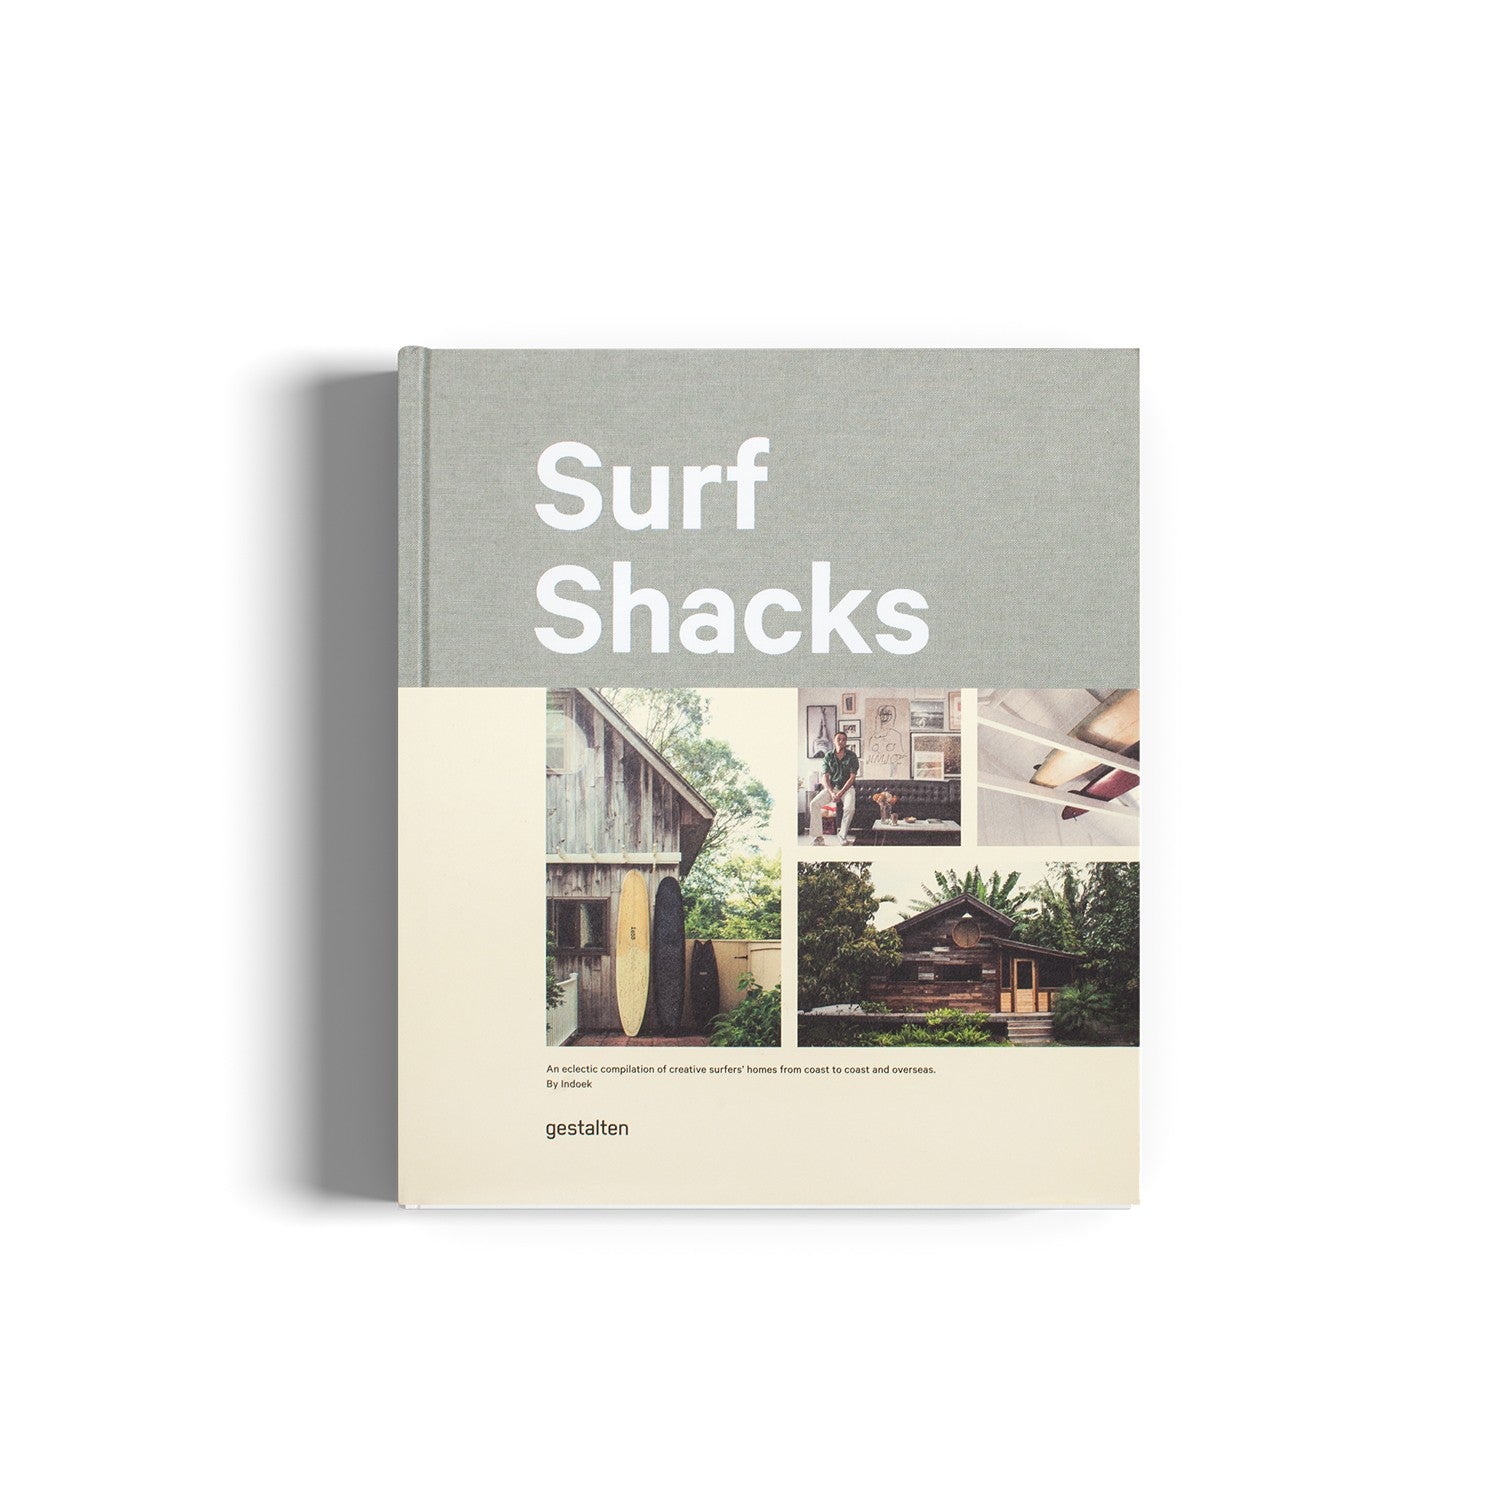 Surf Shacks Vol.1 , Creative surfer's homes